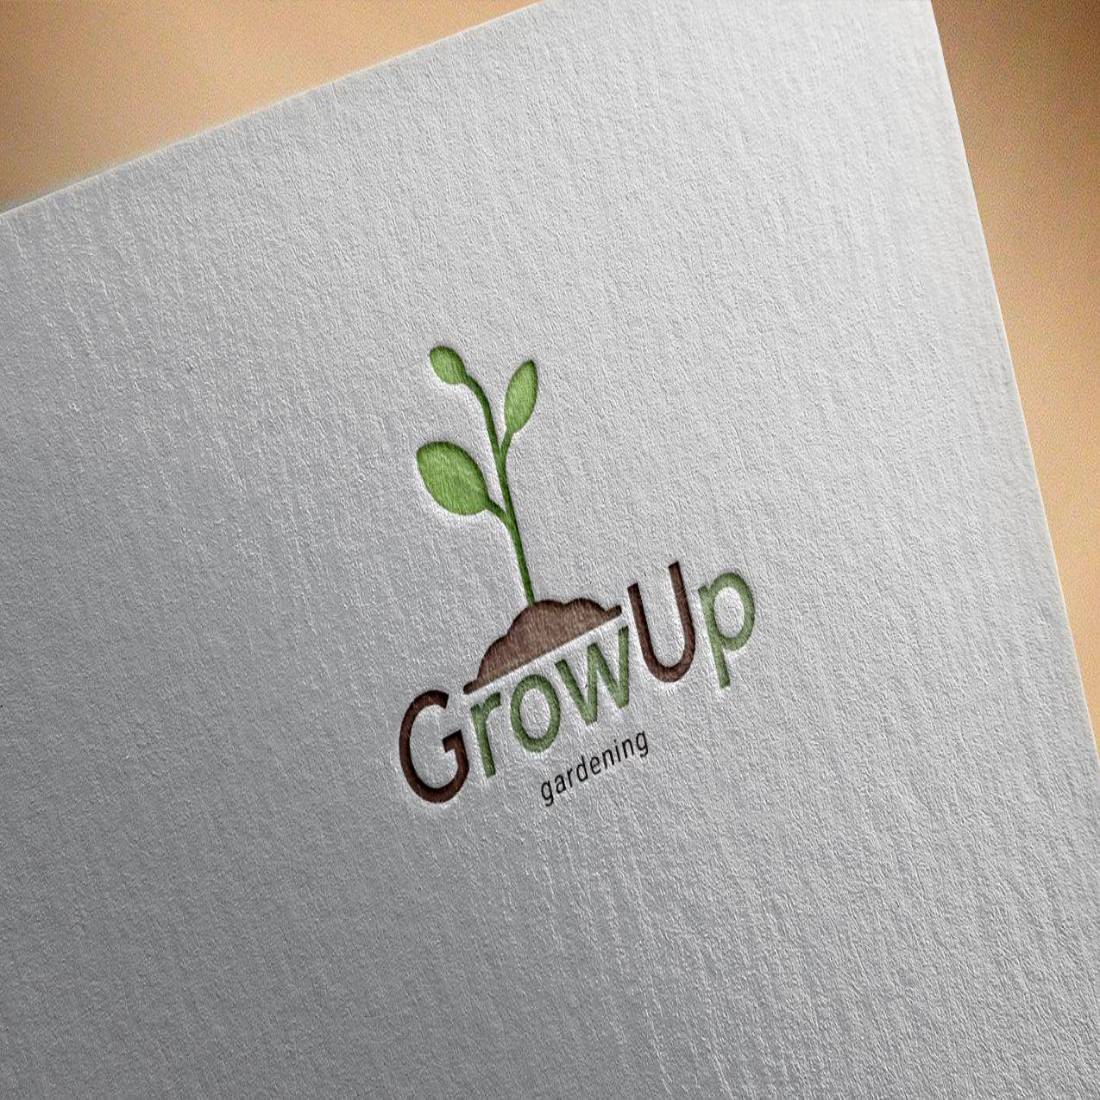 Gardening Shop GrowUp Logo Design cover image.